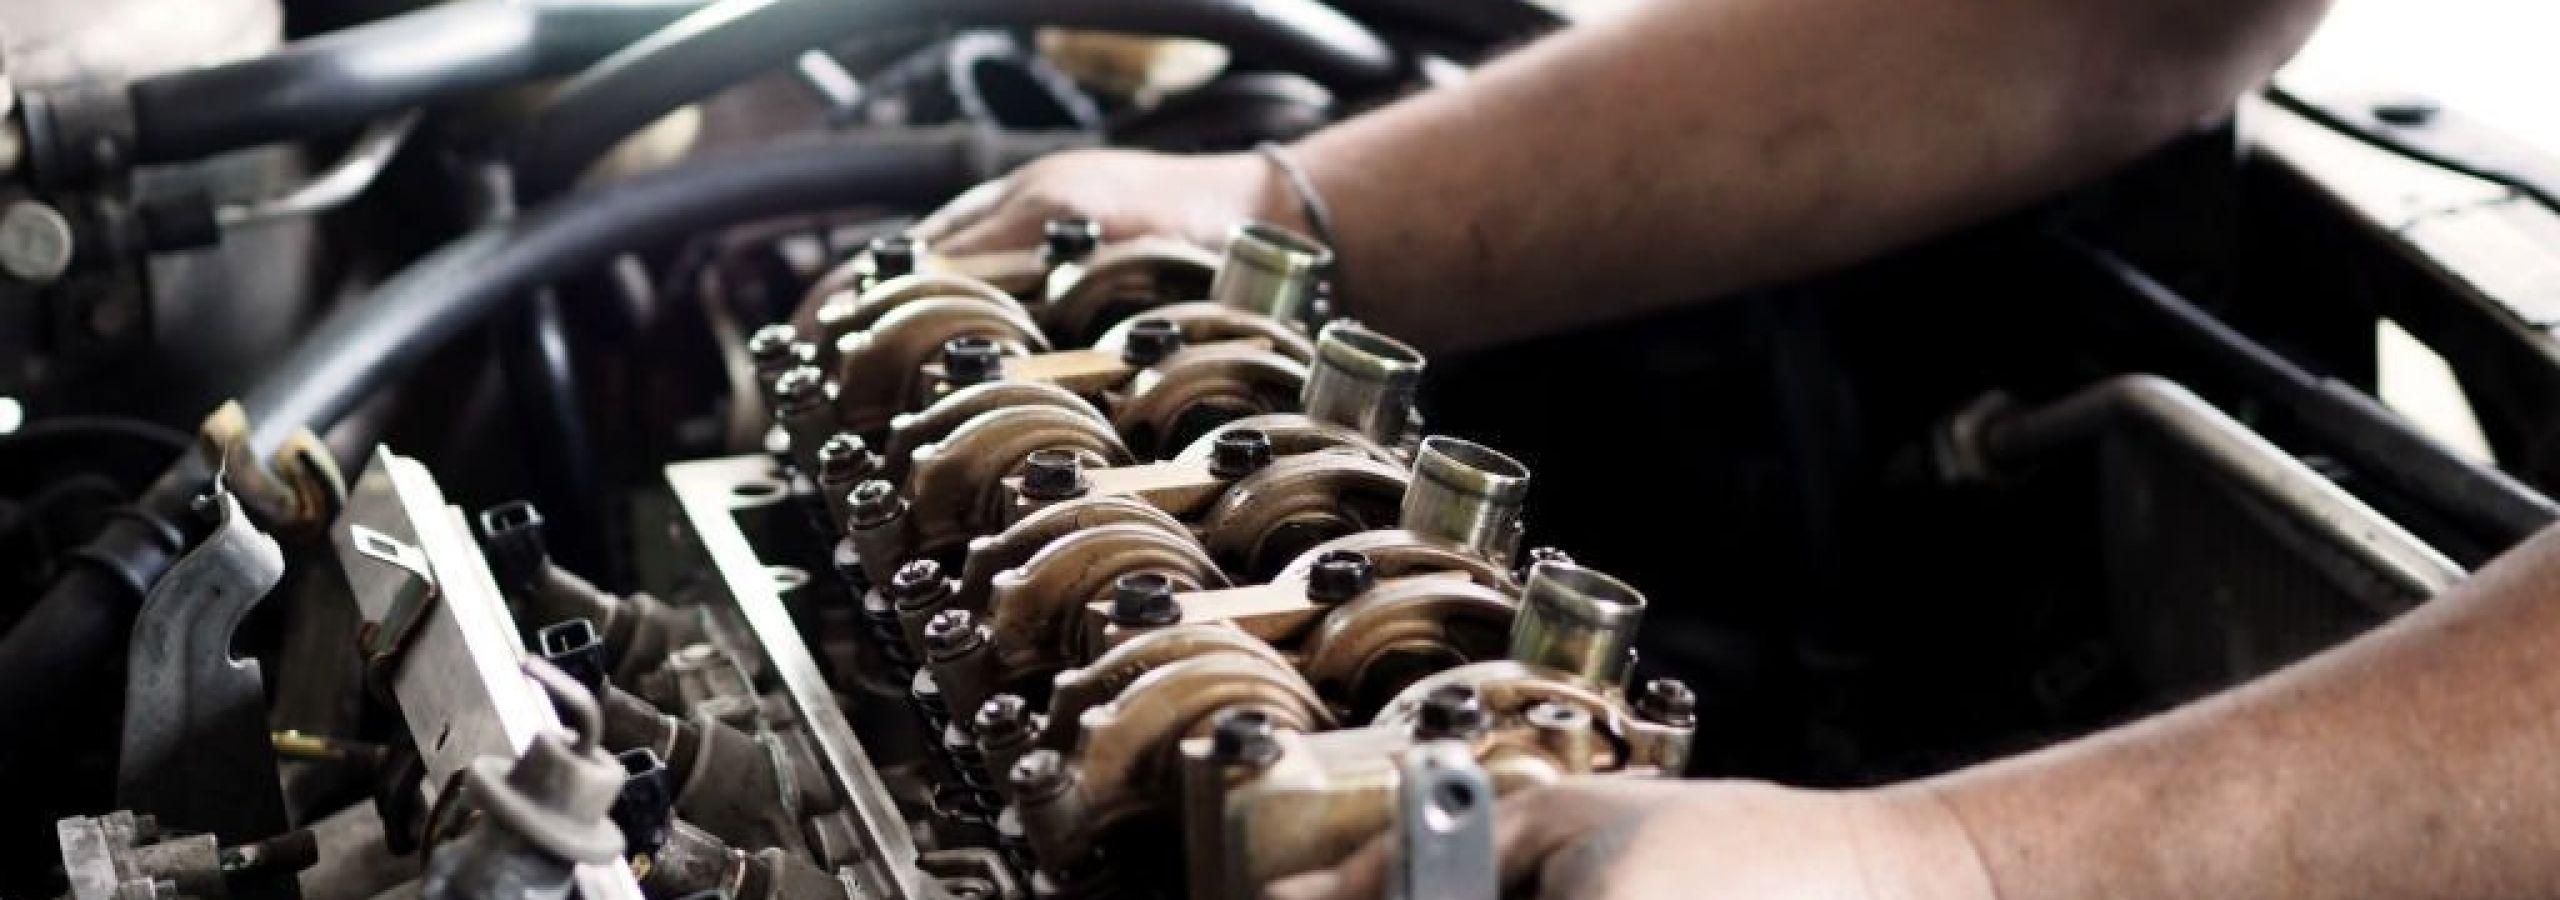 Diesel mechanics replacing or repairing defective parts.